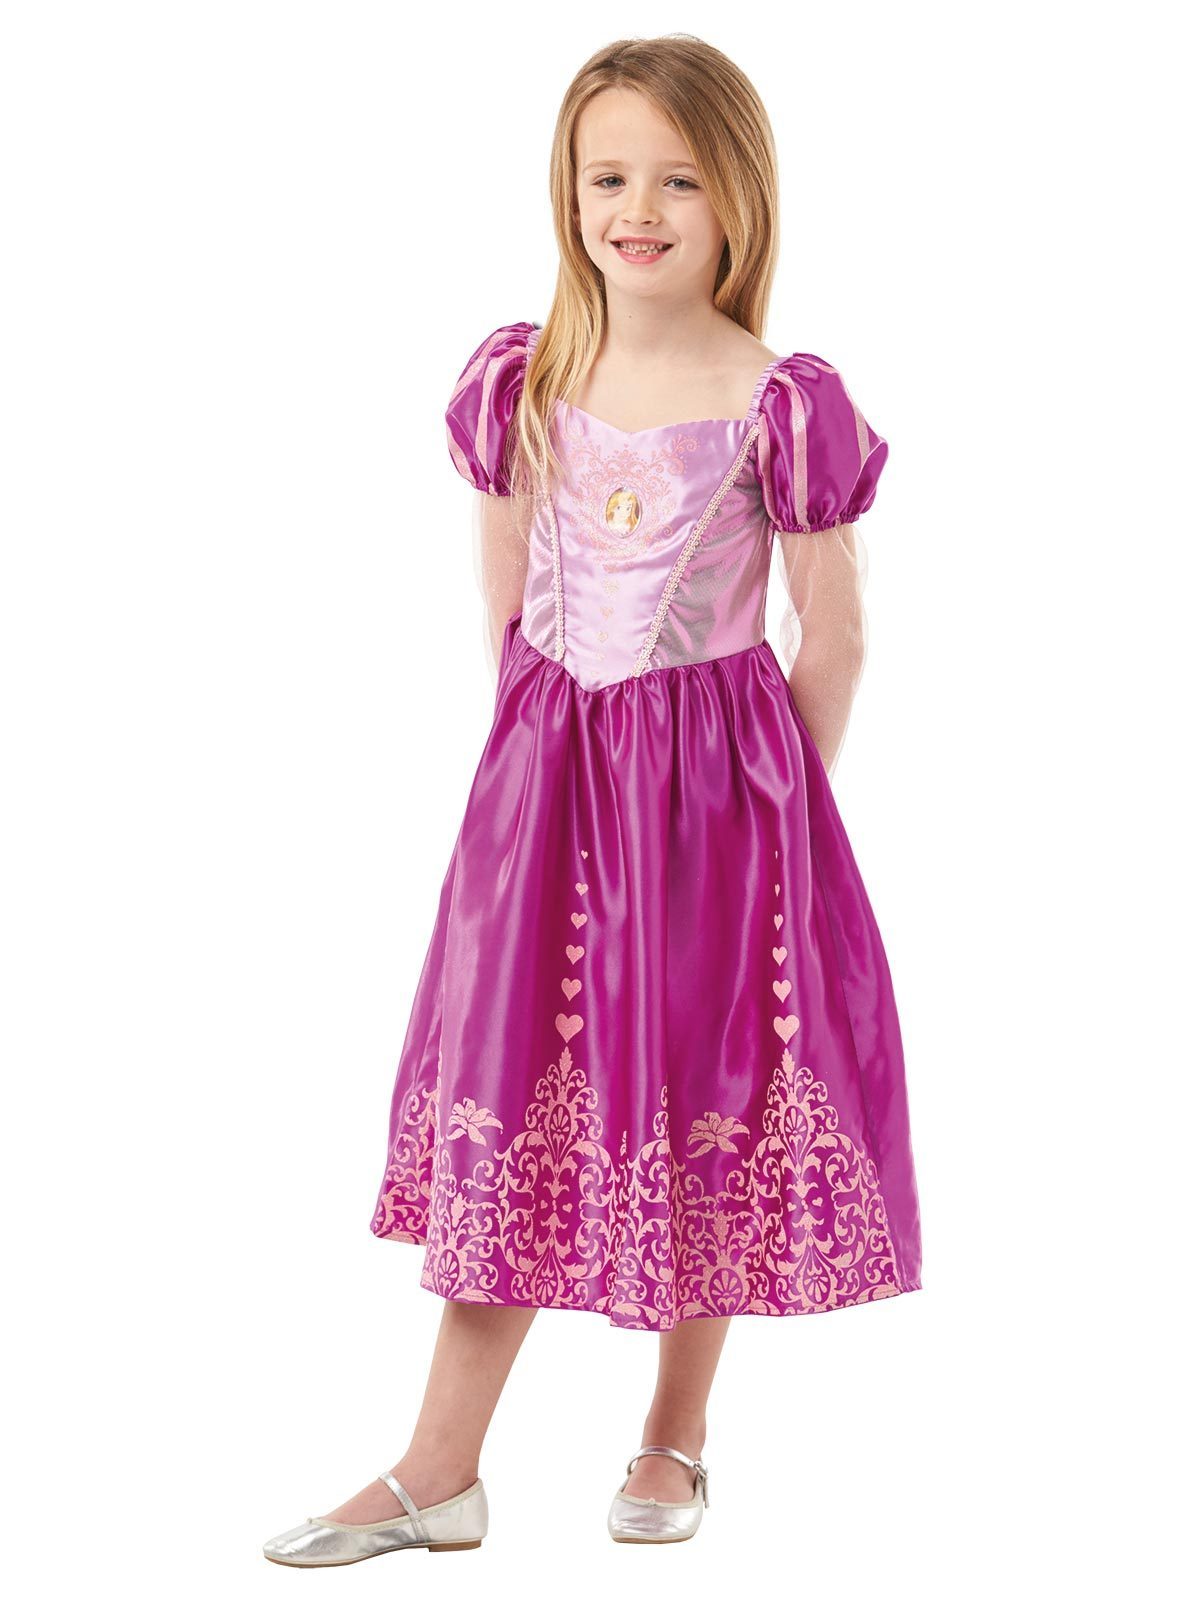 Rapunzel Gem Princess Costume for Kids - Disney Tangled | Costume World NZ